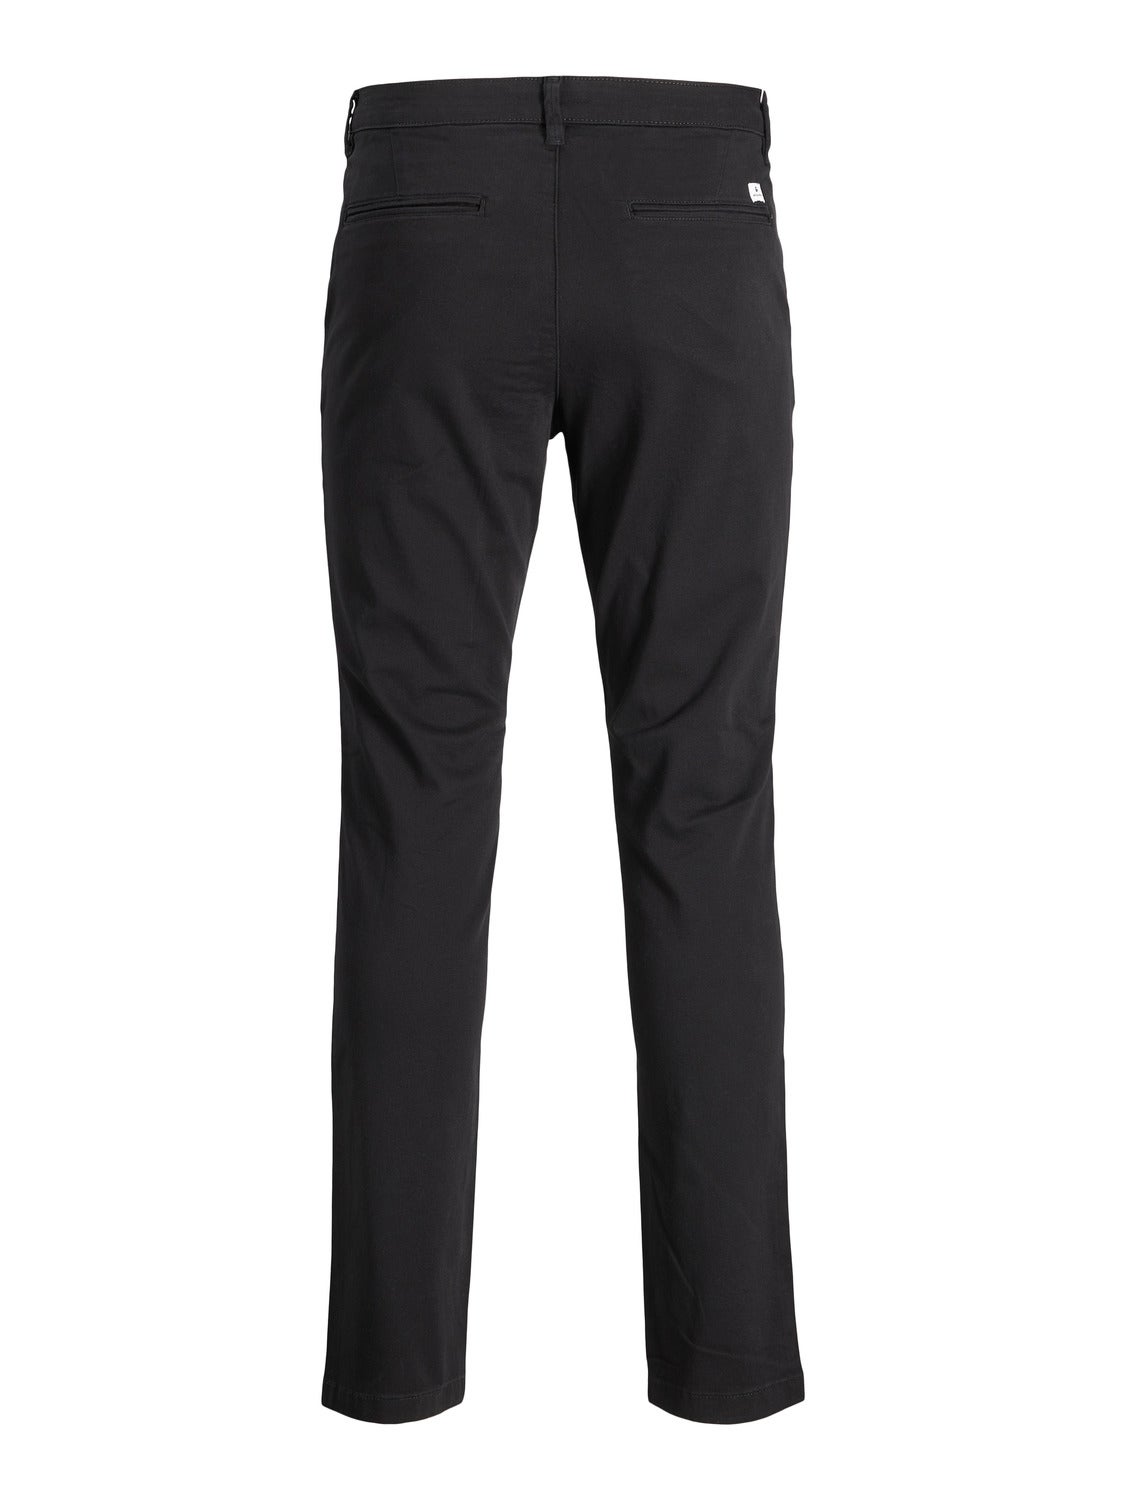 Buy Black M Titan Pass Pant for Men Online at Columbia Sportswear | 479698